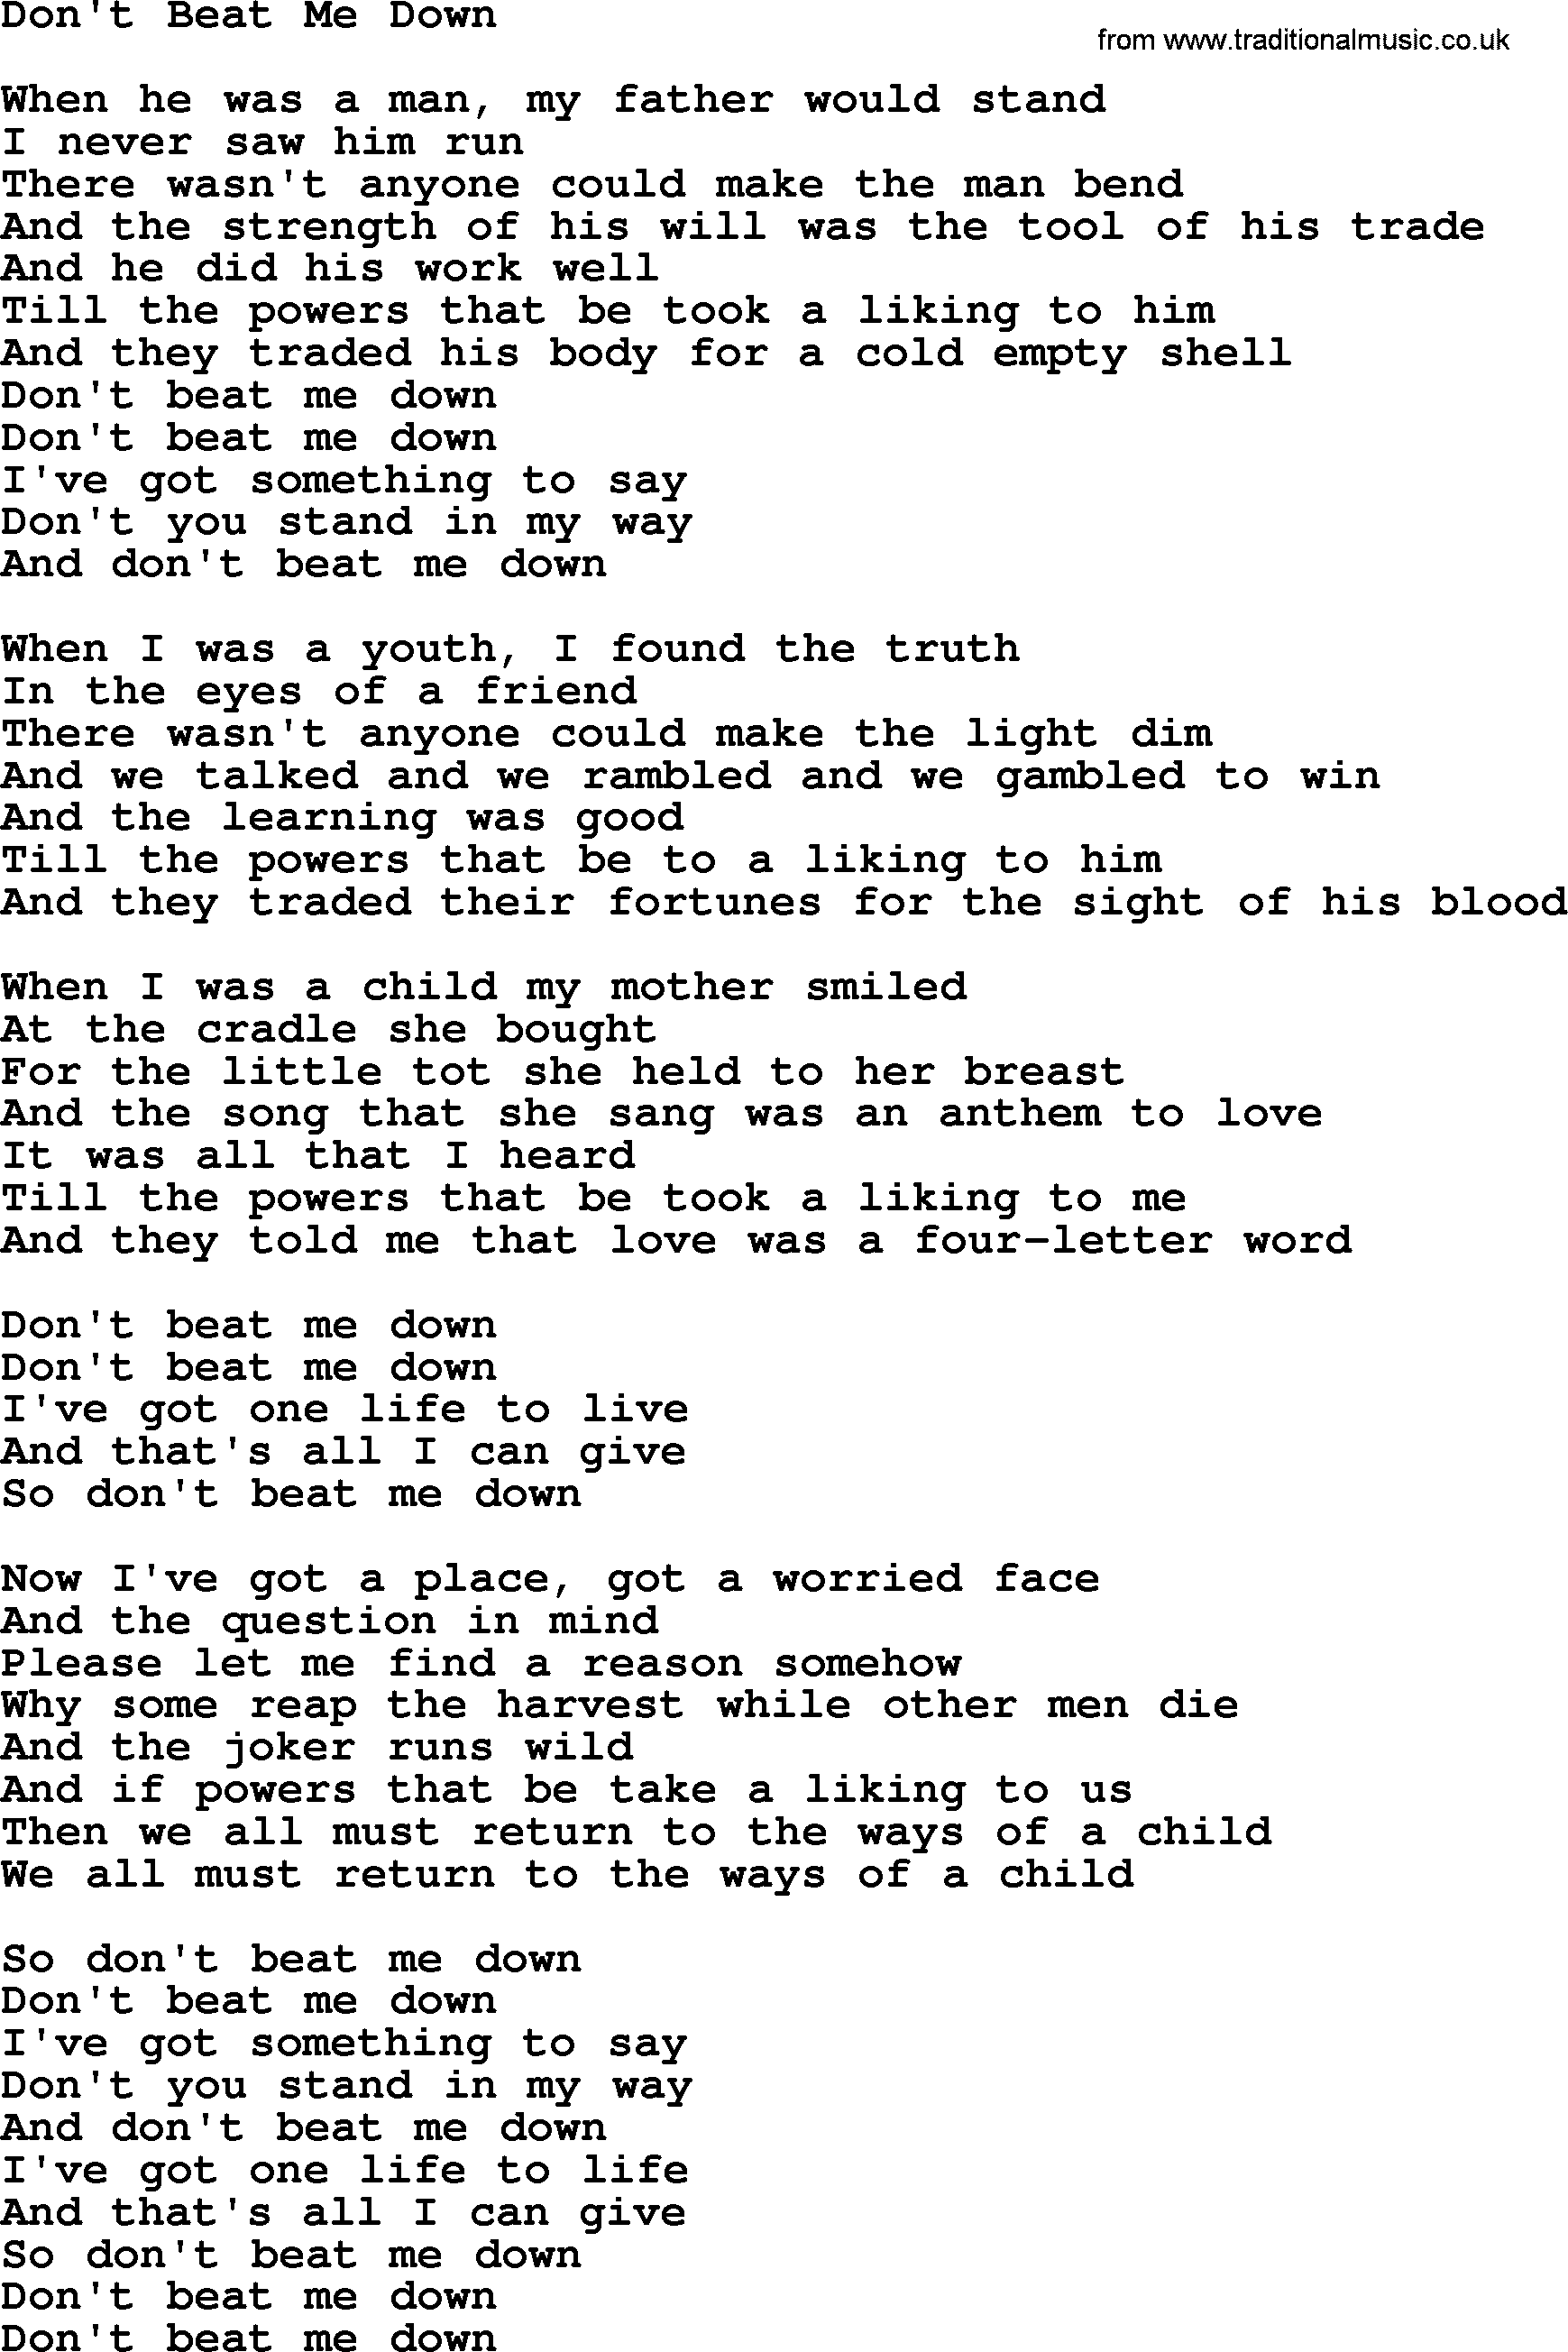 Gordon Lightfoot song Don't Beat Me Down, lyrics